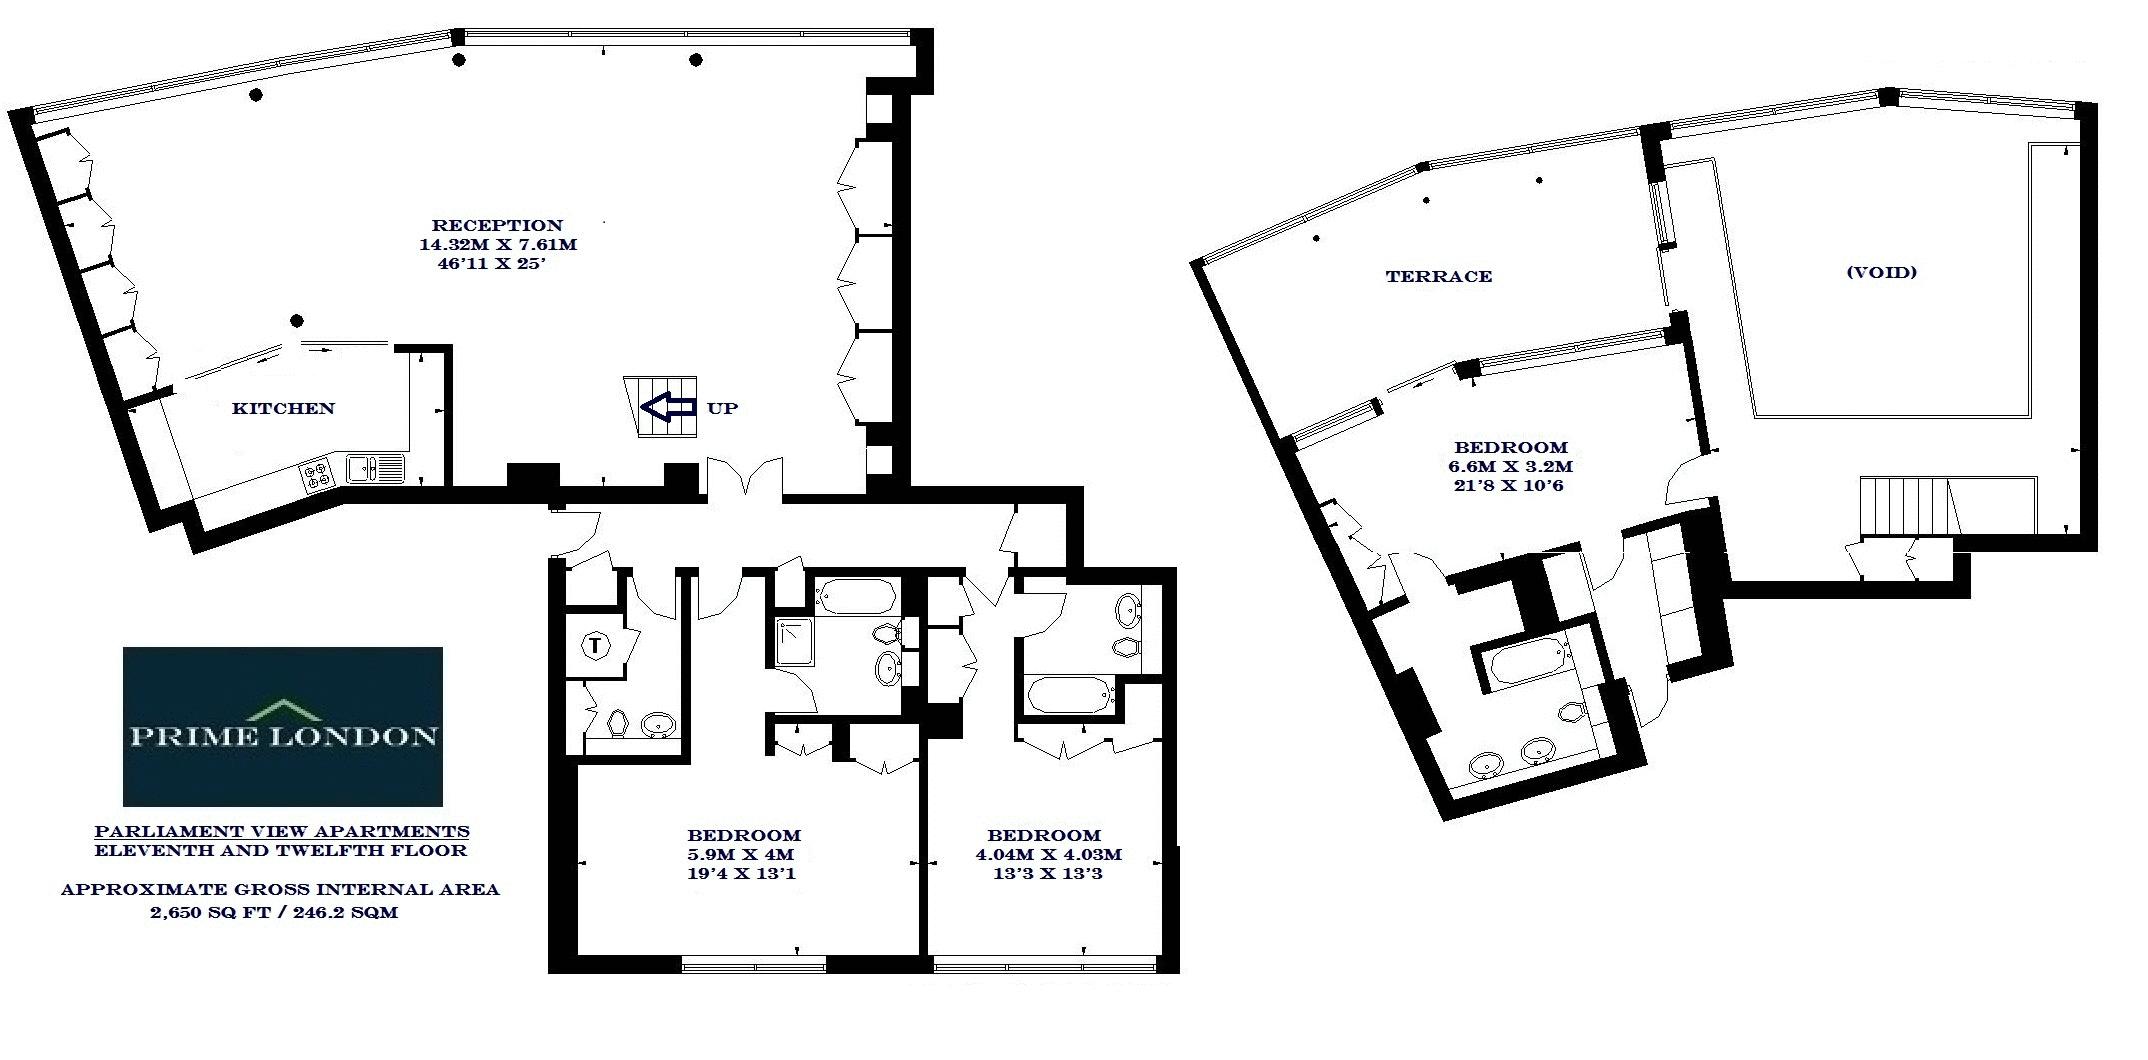 3 Bedrooms Flat to rent in Parliament View Apartments, 1 Albert Embankment, London SE1